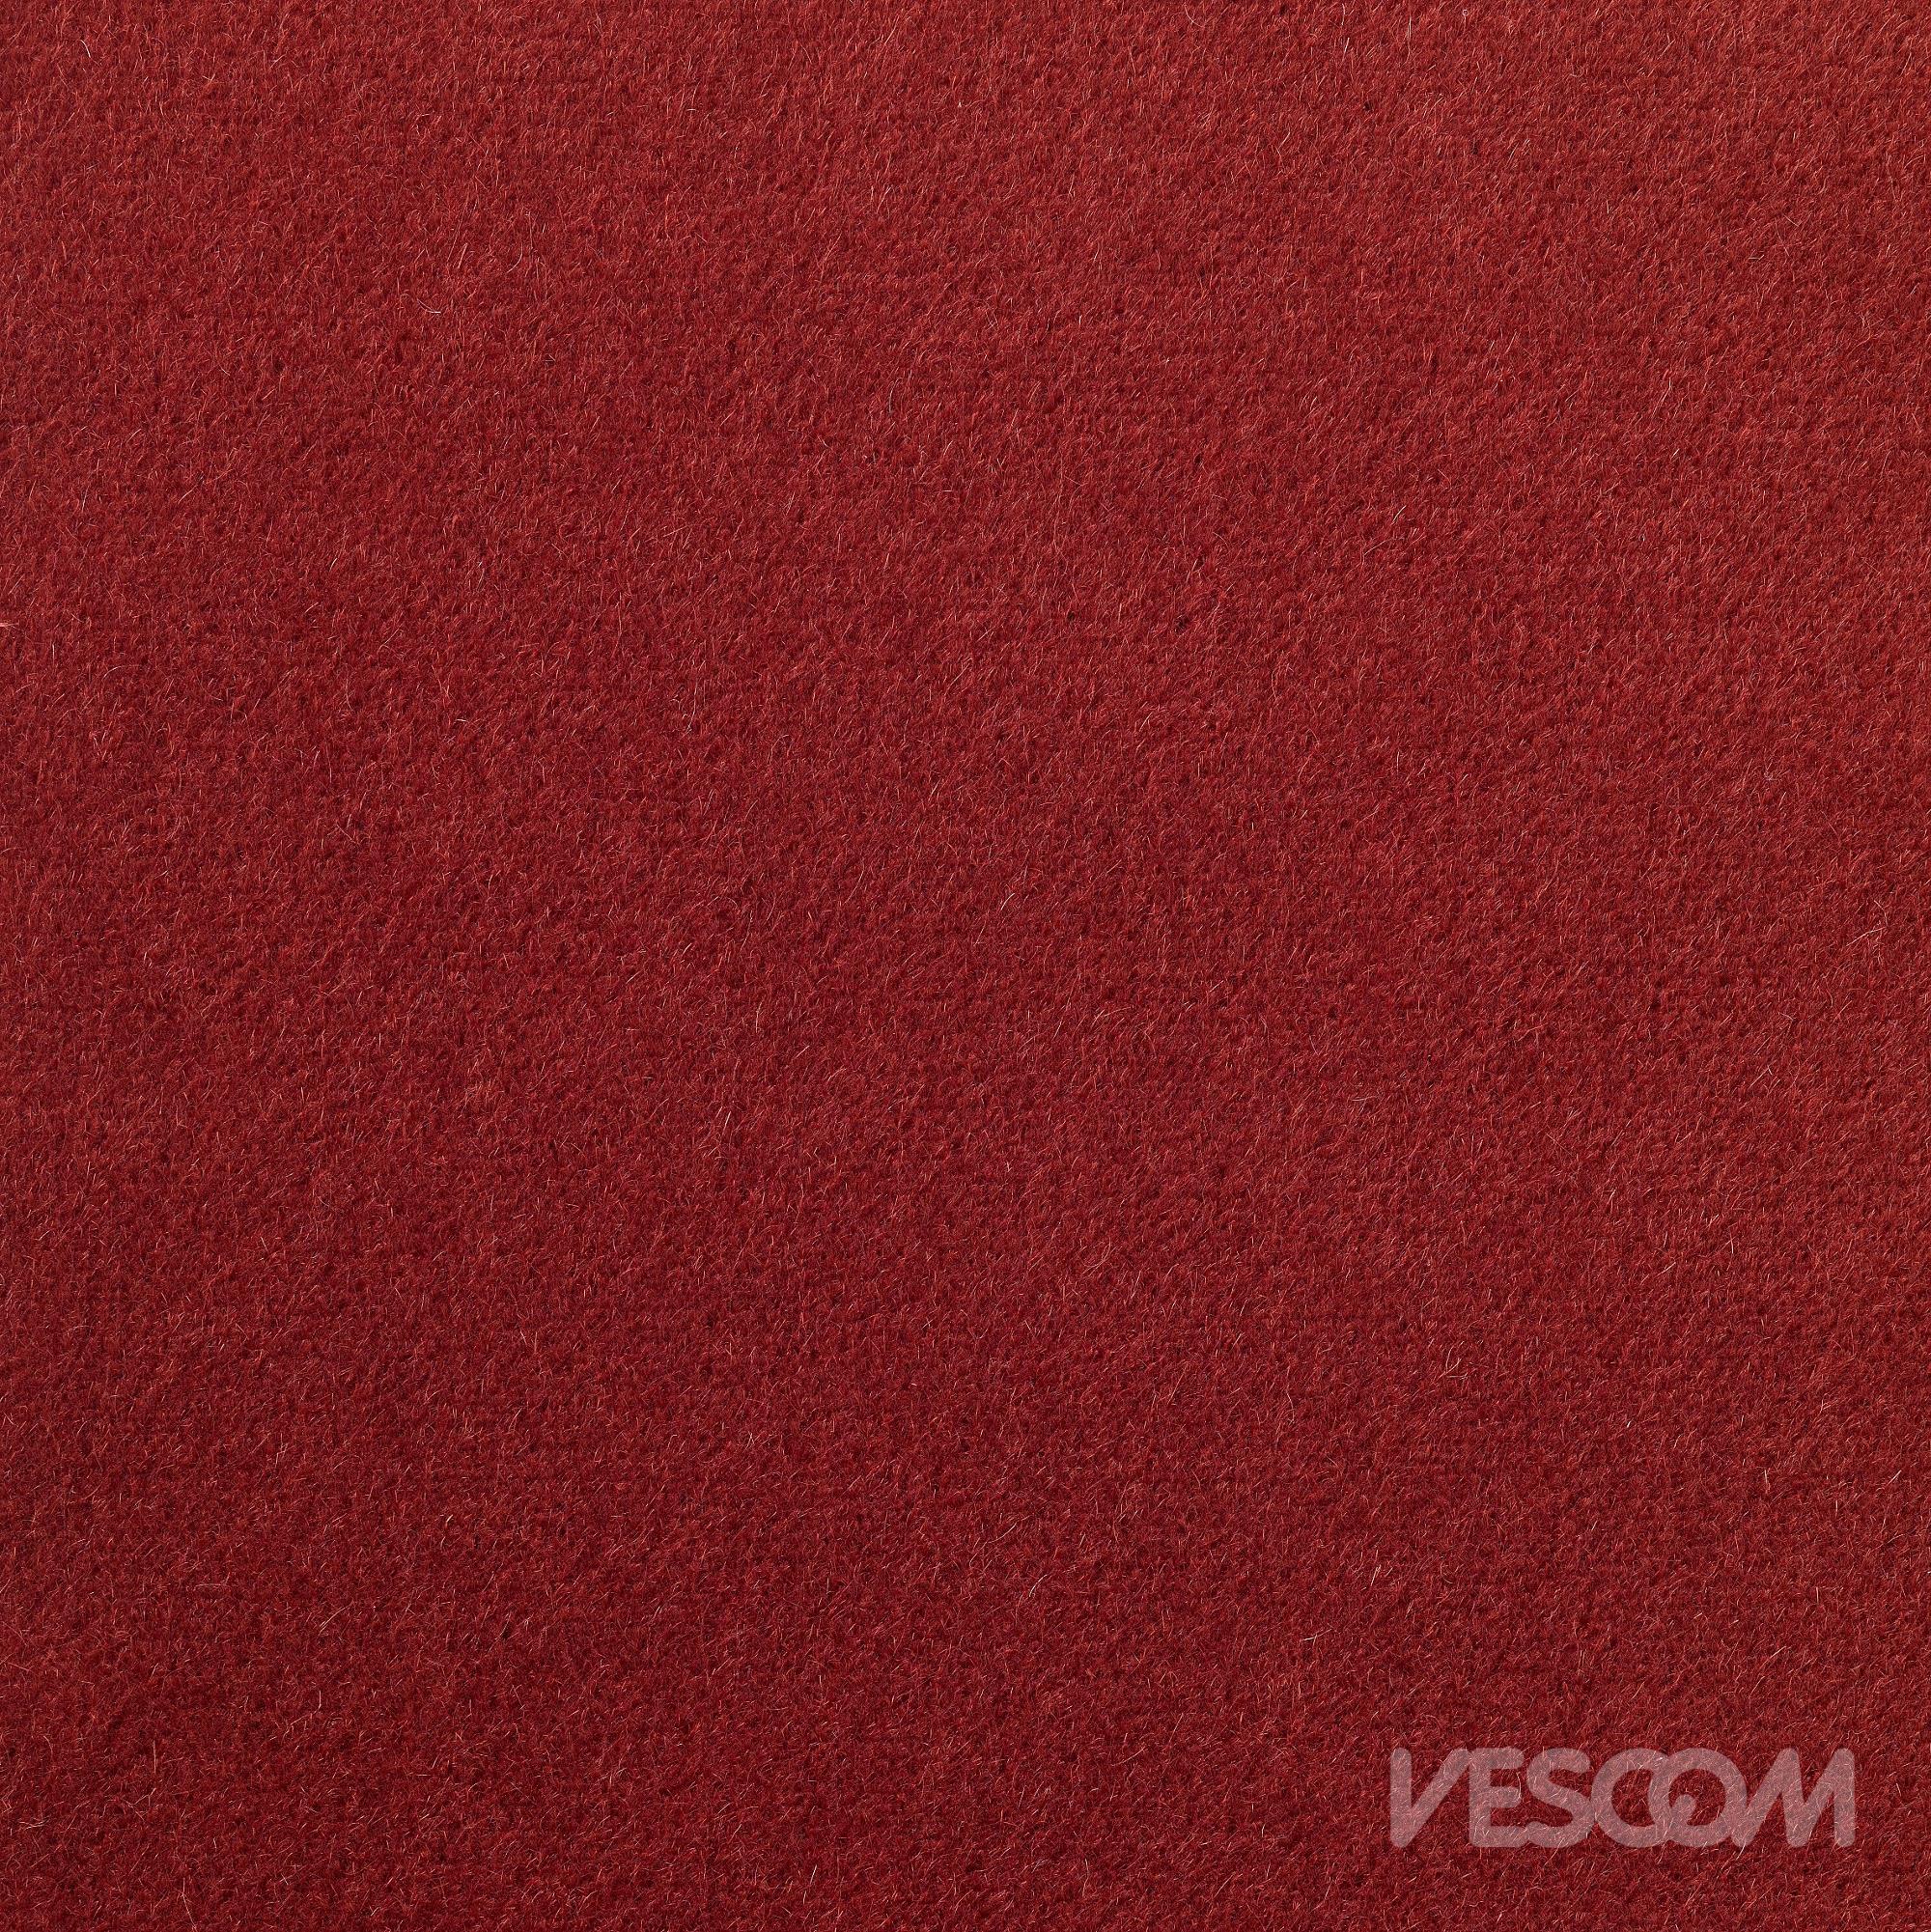 Vescom Ariana Upholstery Fabric 7061.29